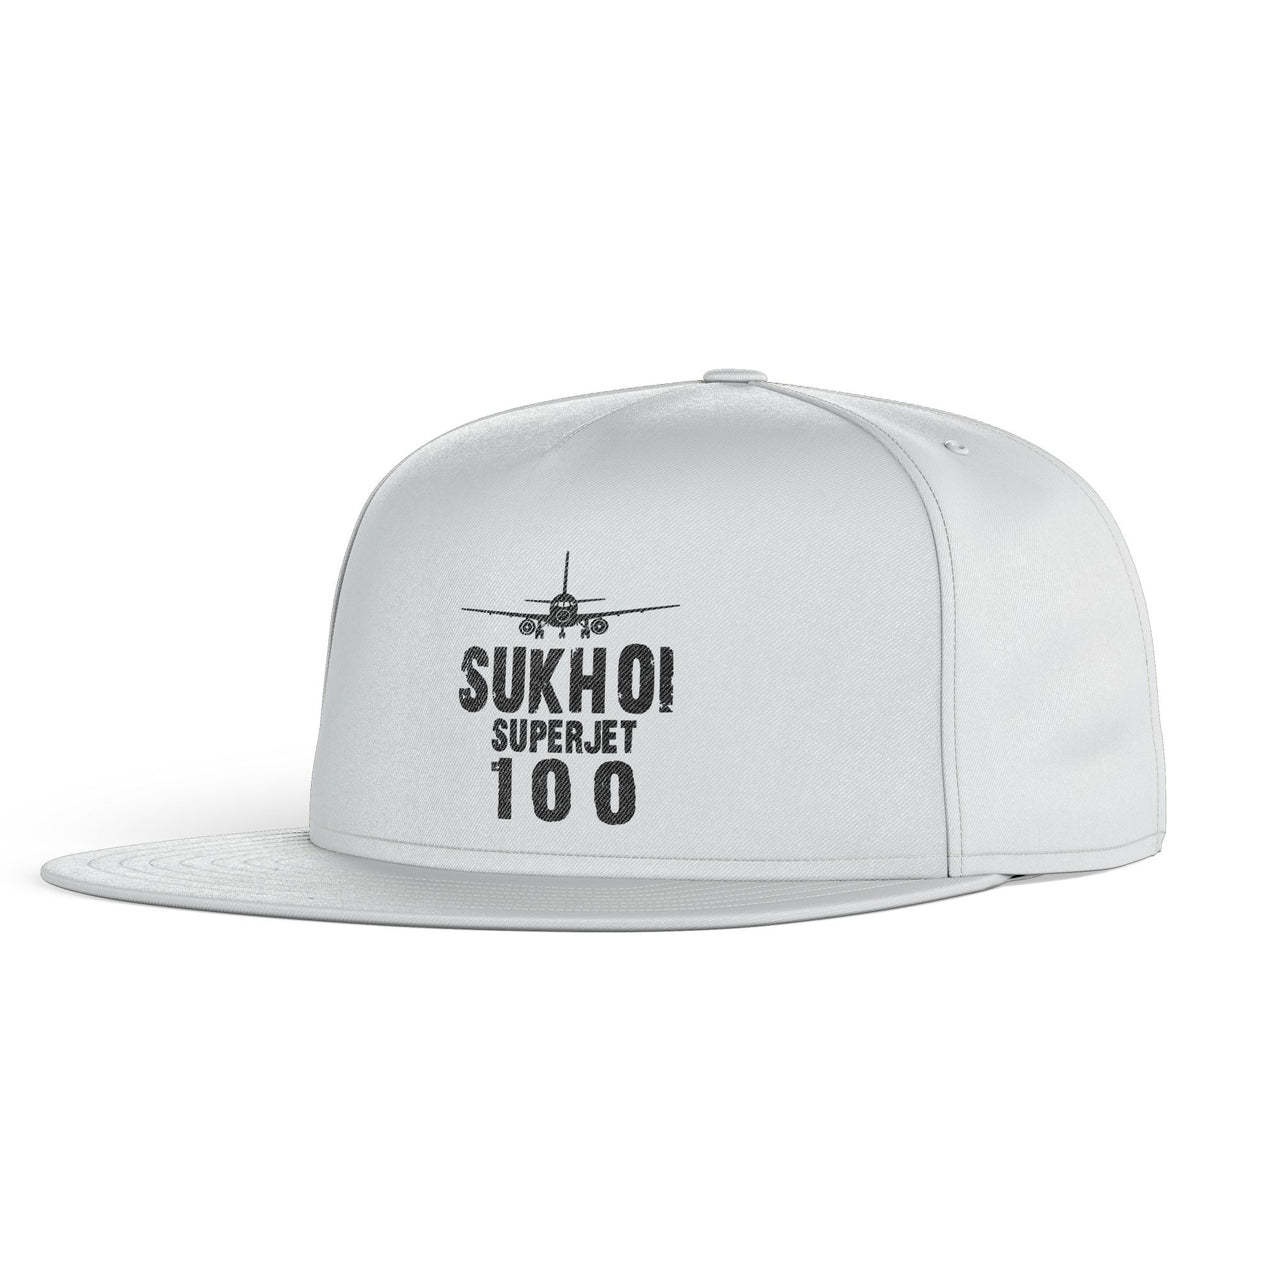 Sukhoi Superjet 100 & Plane Designed Snapback Caps & Hats